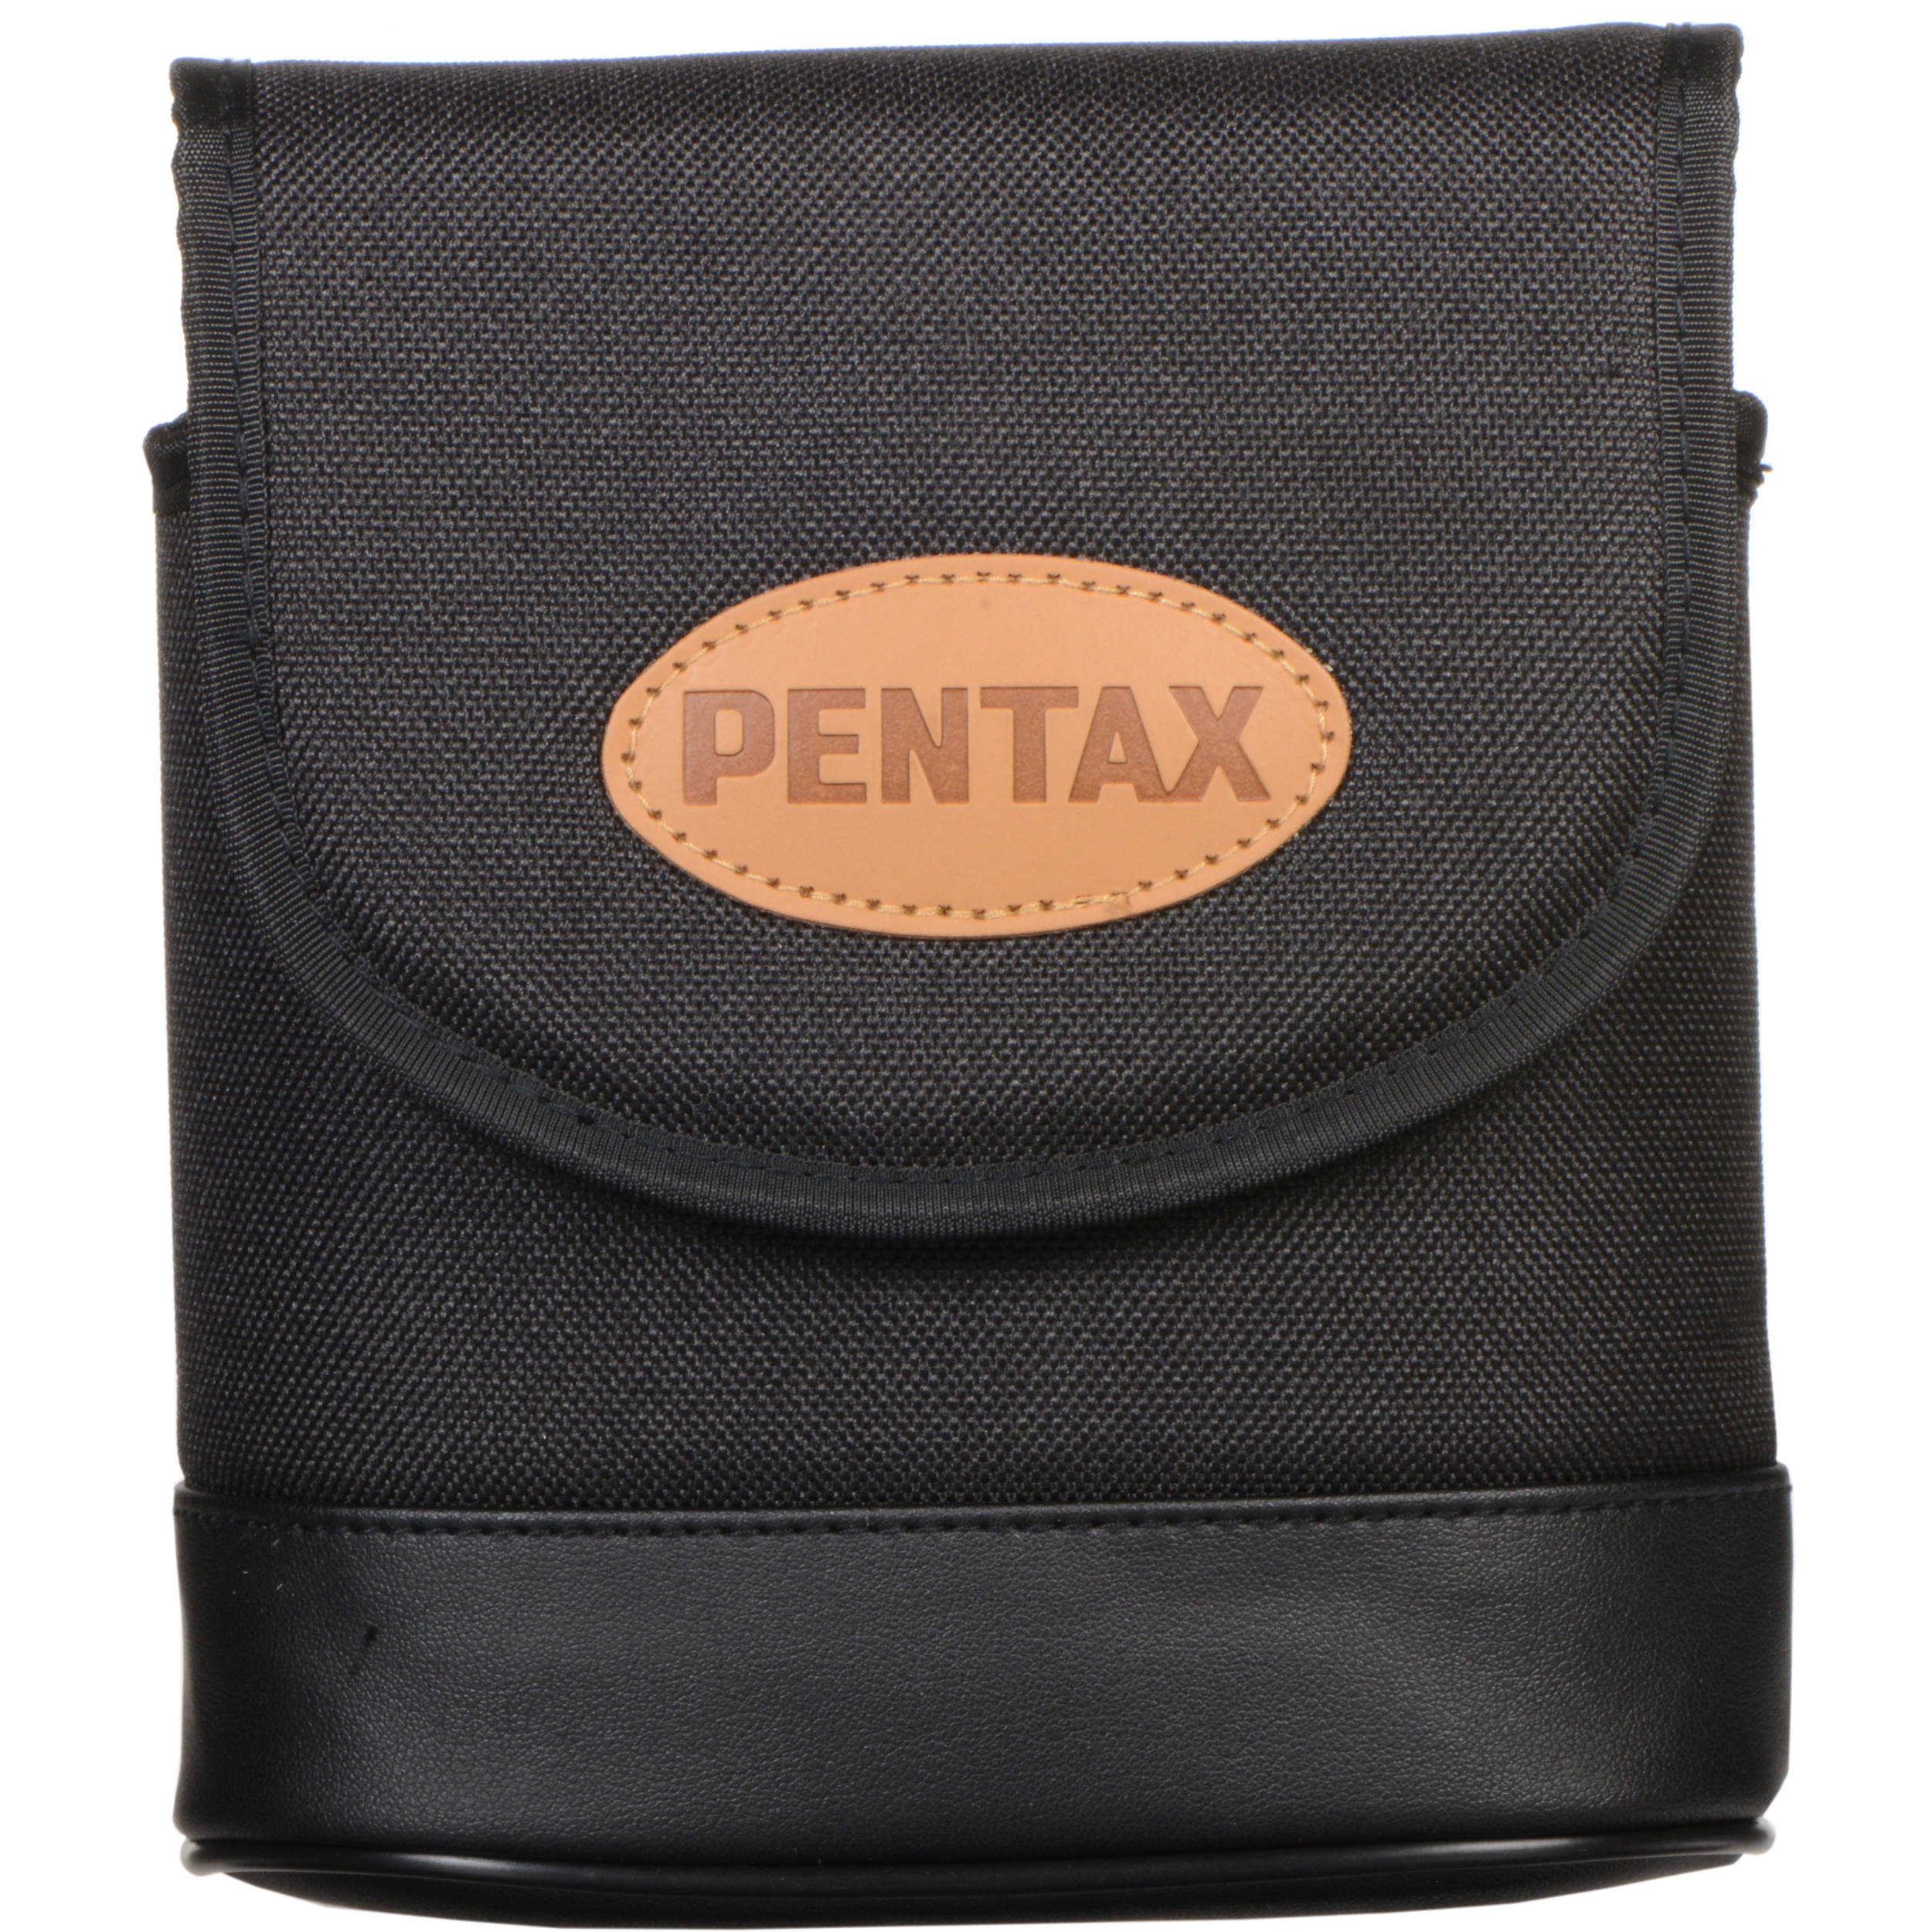 pentax ad 8x36